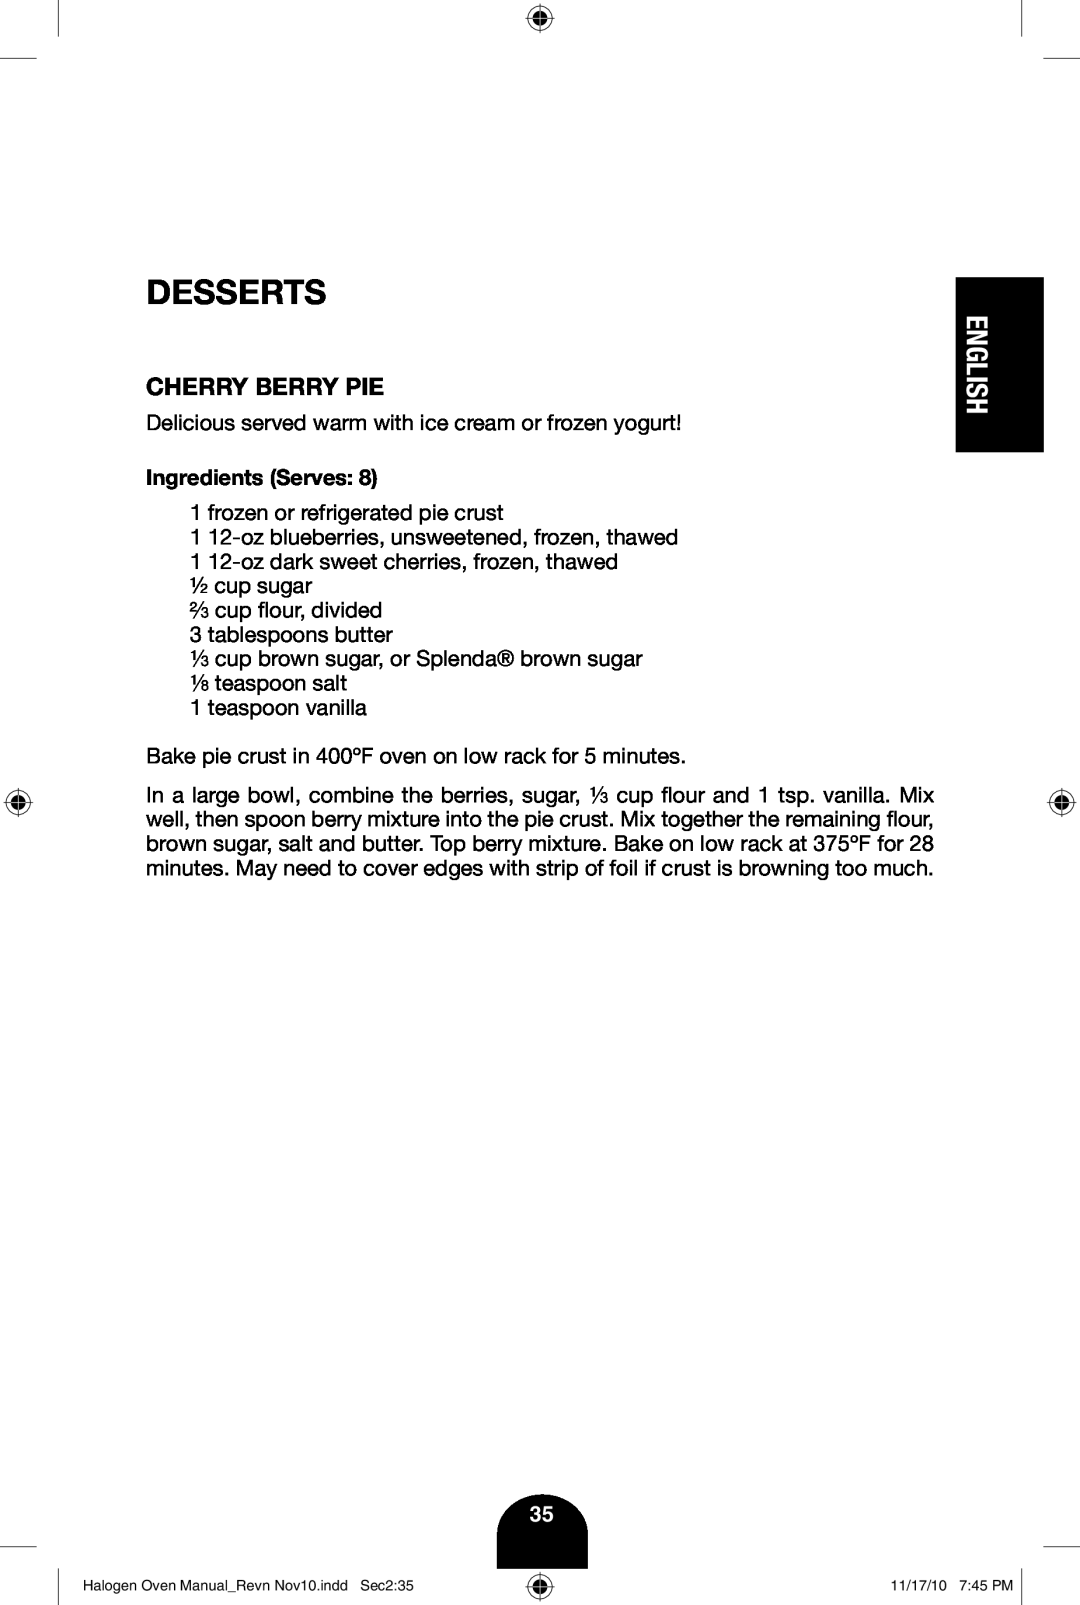 Fagor America 670040380 user manual Desserts, Cherry Berry Pie, English 